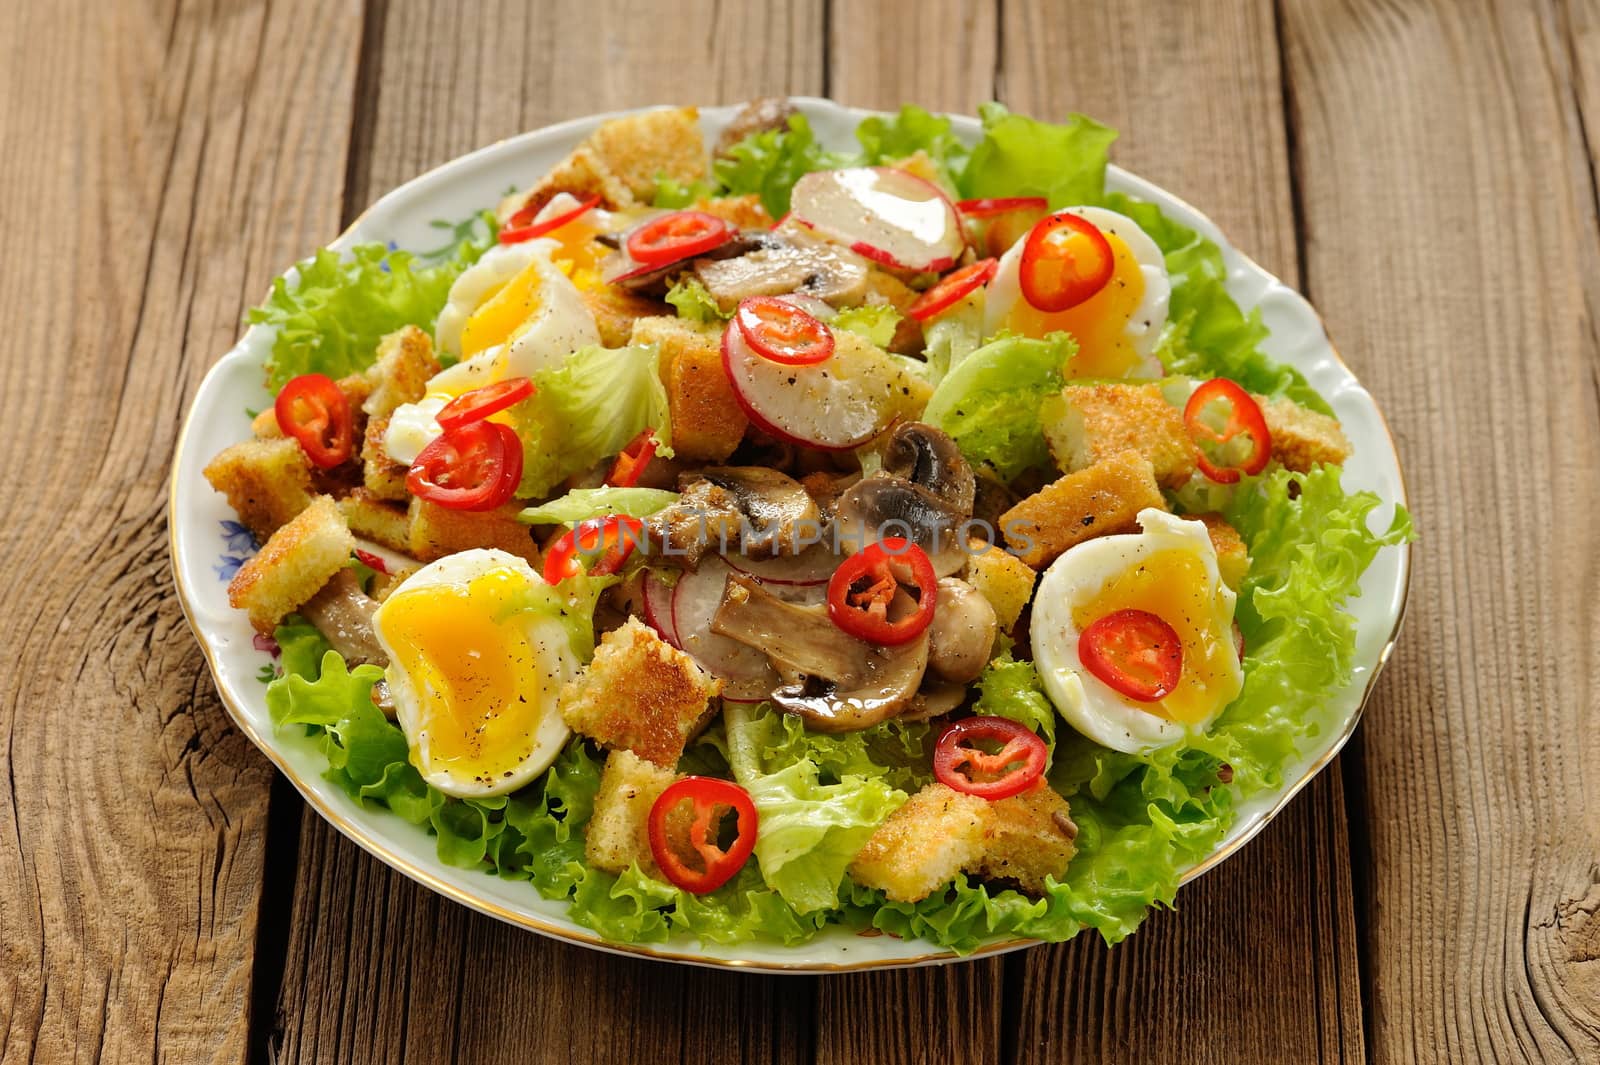 Salad Caesar with mushrooms, eggs, chili and radish on wooden ba by Borodin